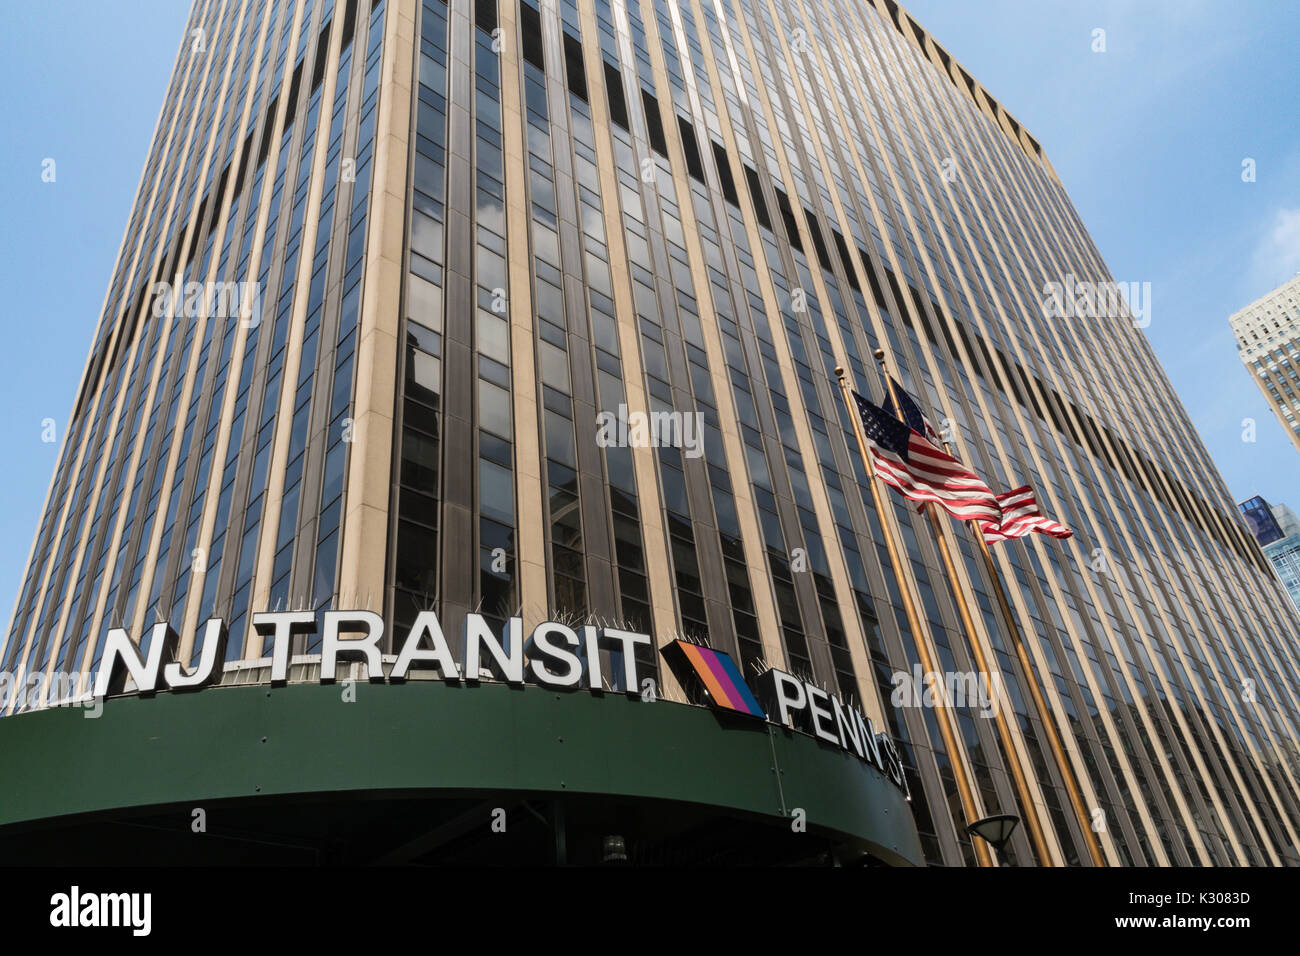 Penn Plaza mit NJ Transit und der Penn Station Eingang, NYC, USA Stockfoto